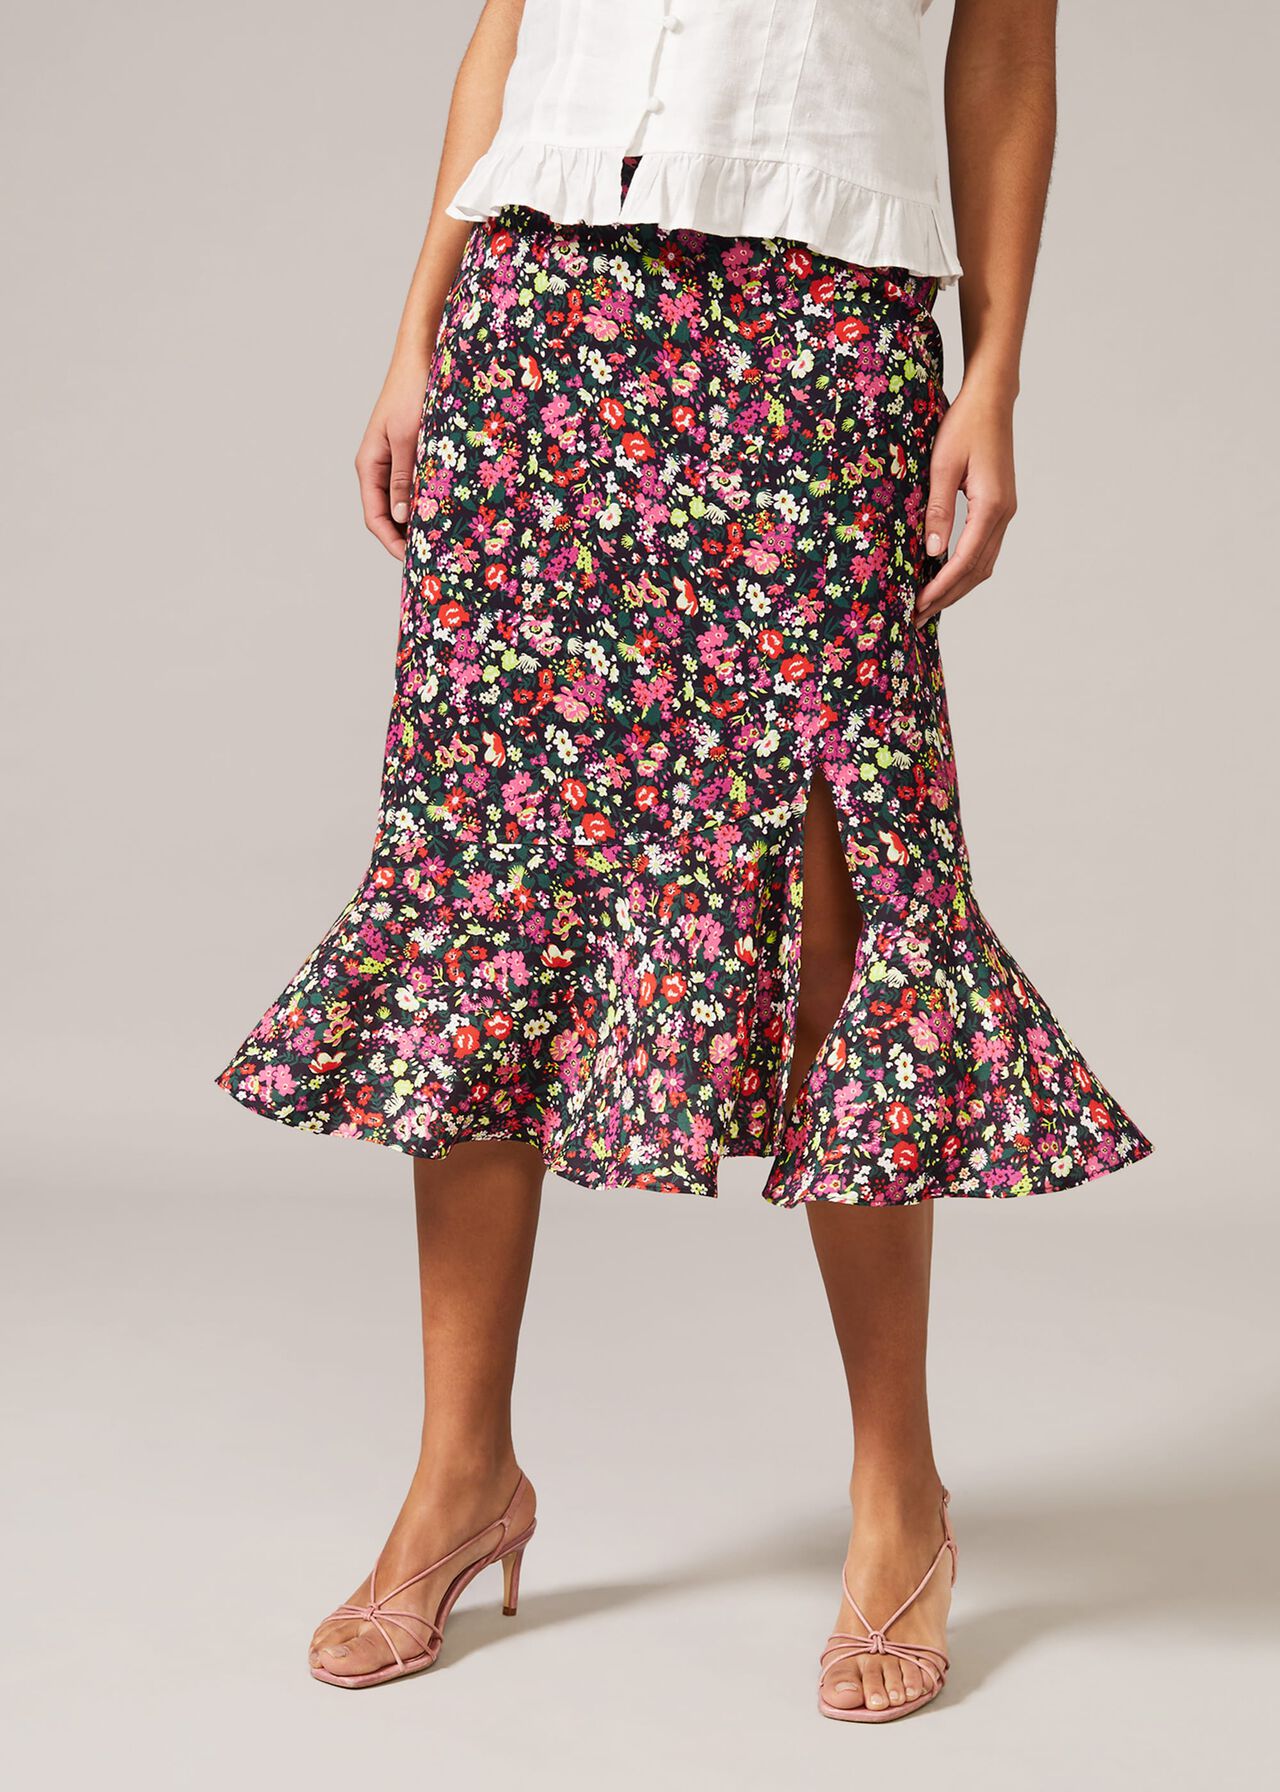 Libertine Floral Midi Skirt